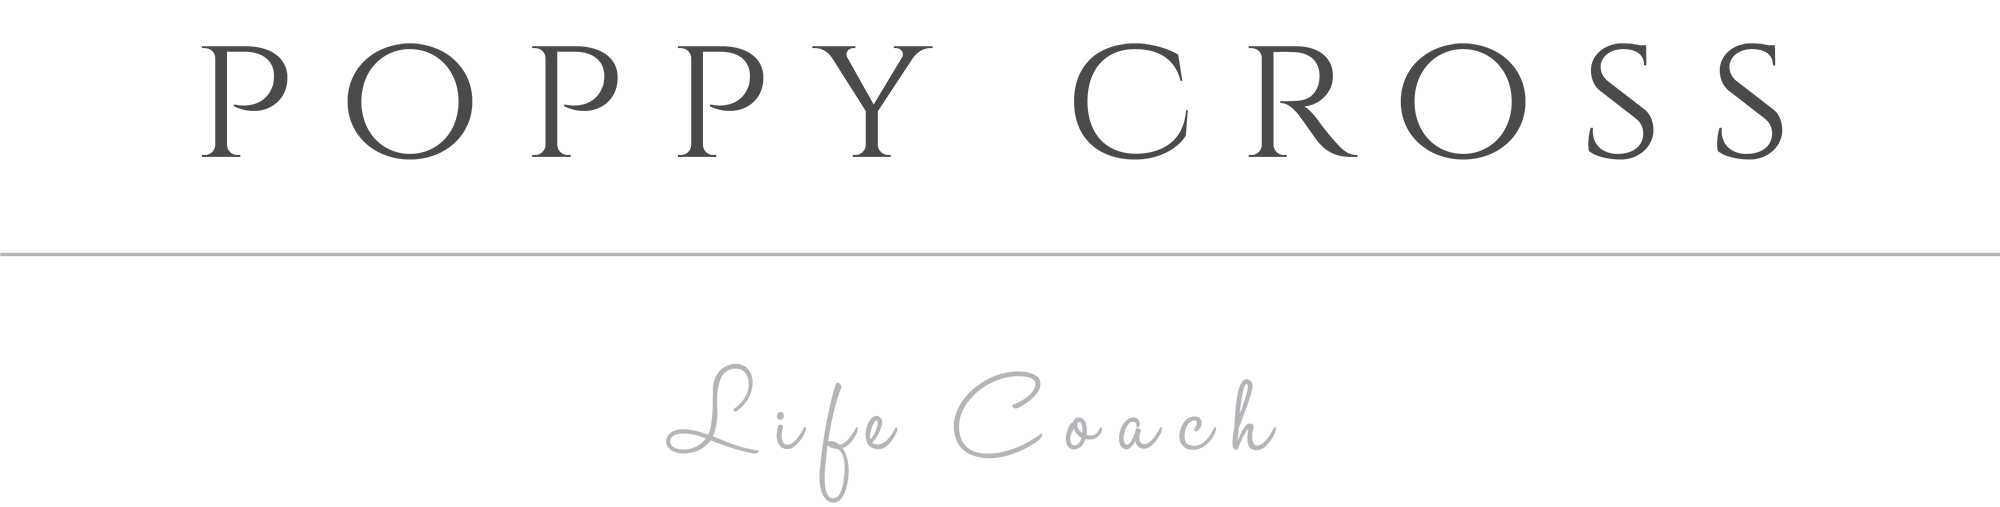 Poppy Cross | Life coach